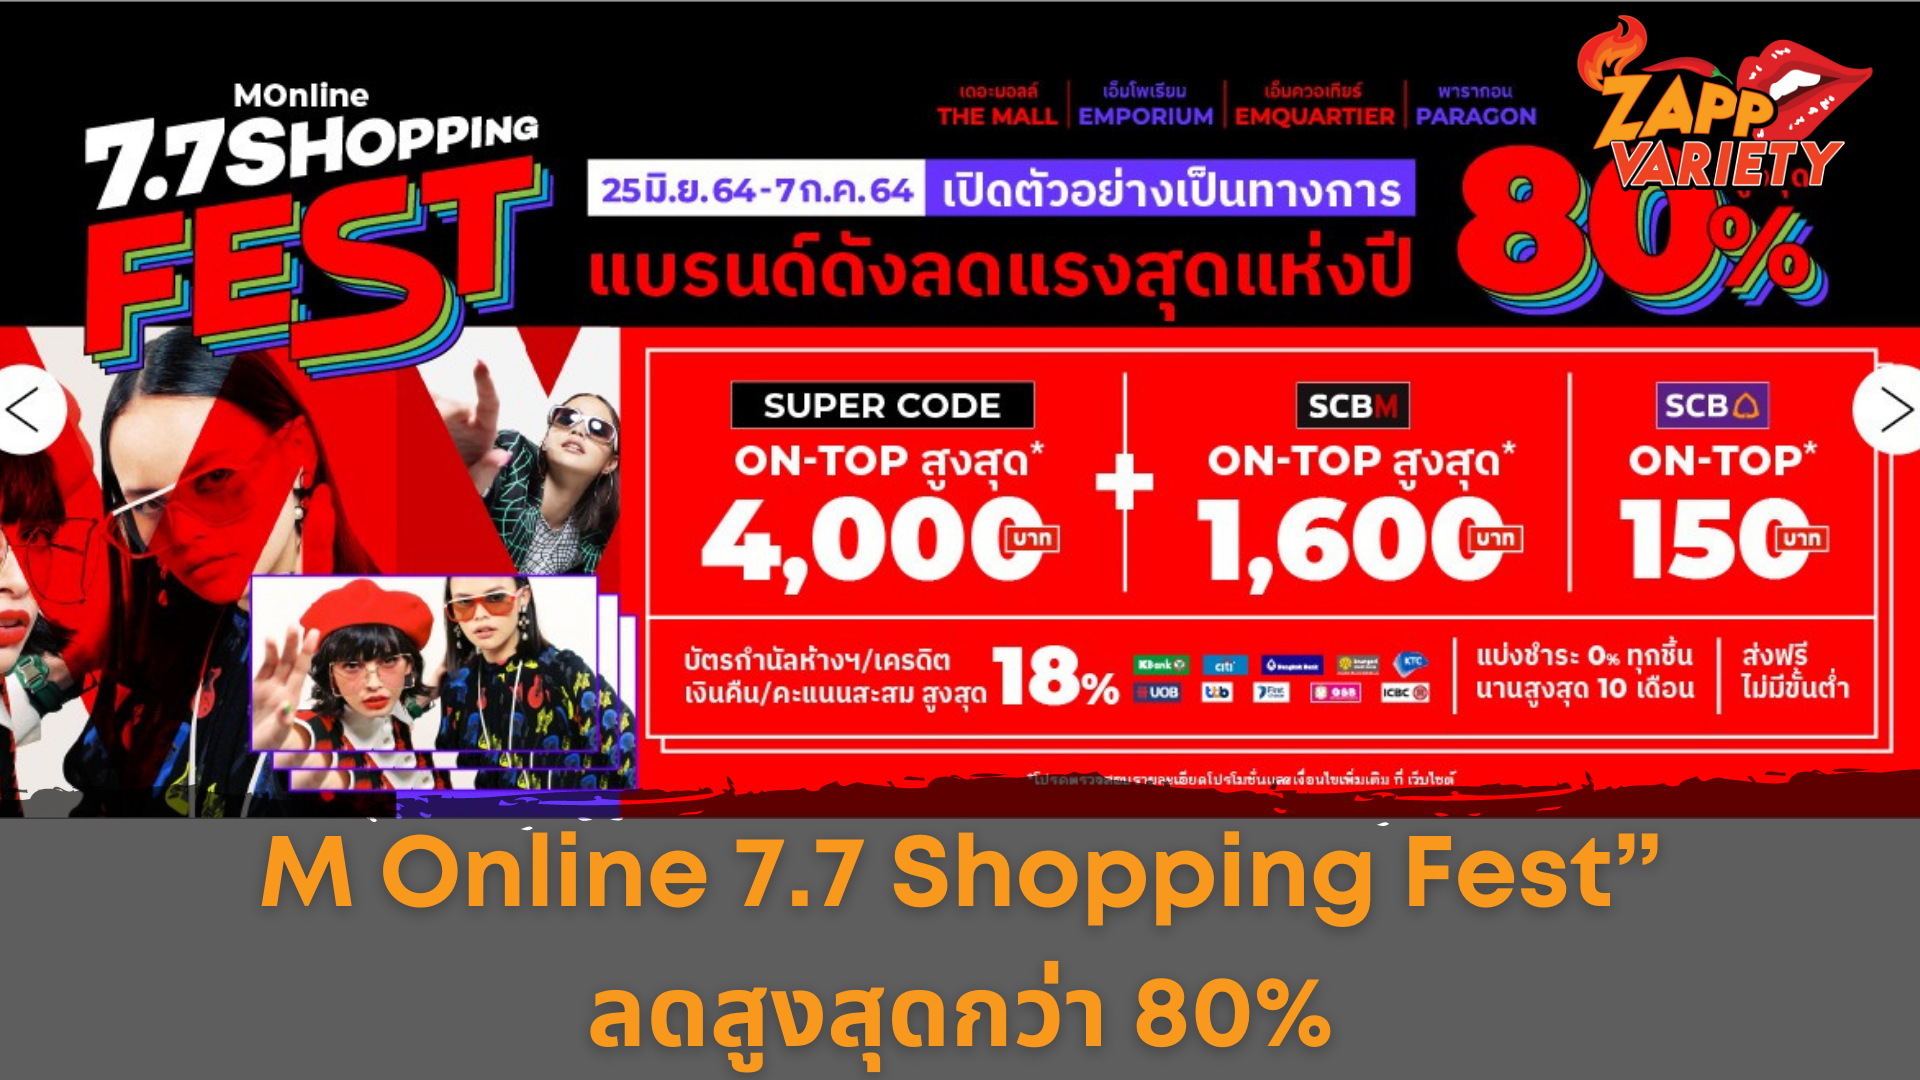 MONLINE.COM แบรนด์ดังรวมพลังเปย์ไม่ยั้ง จัดแคมเปญ “M Online 7.7 Shopping Fest” ลดสูงสุดกว่า 80%